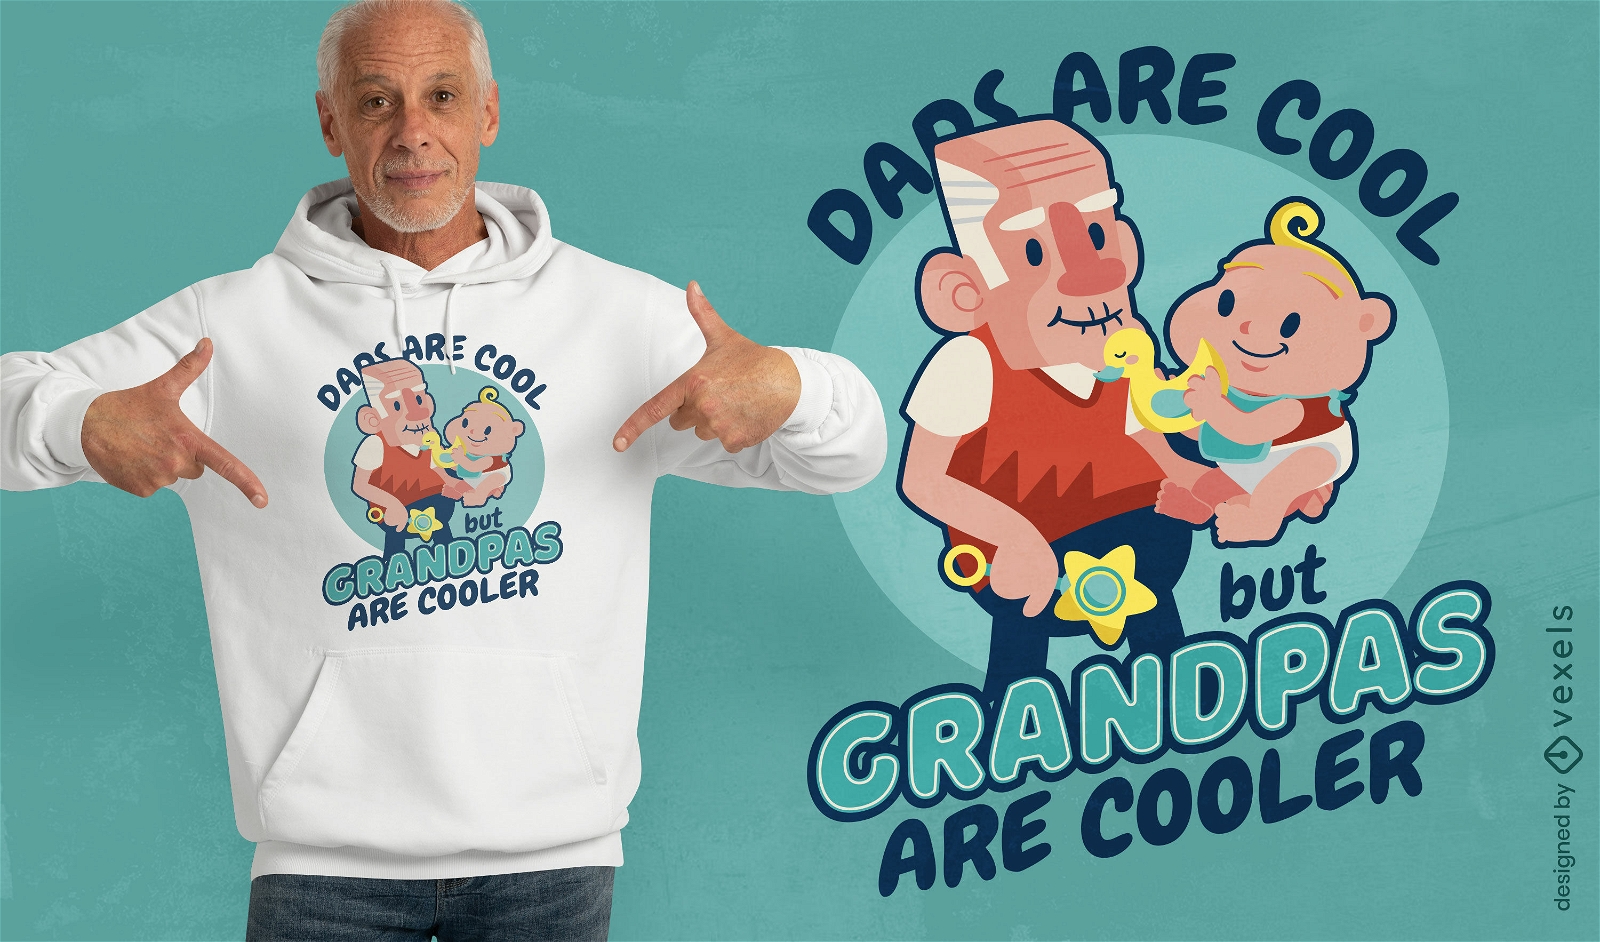 Grandpas are cooler t-shirt design